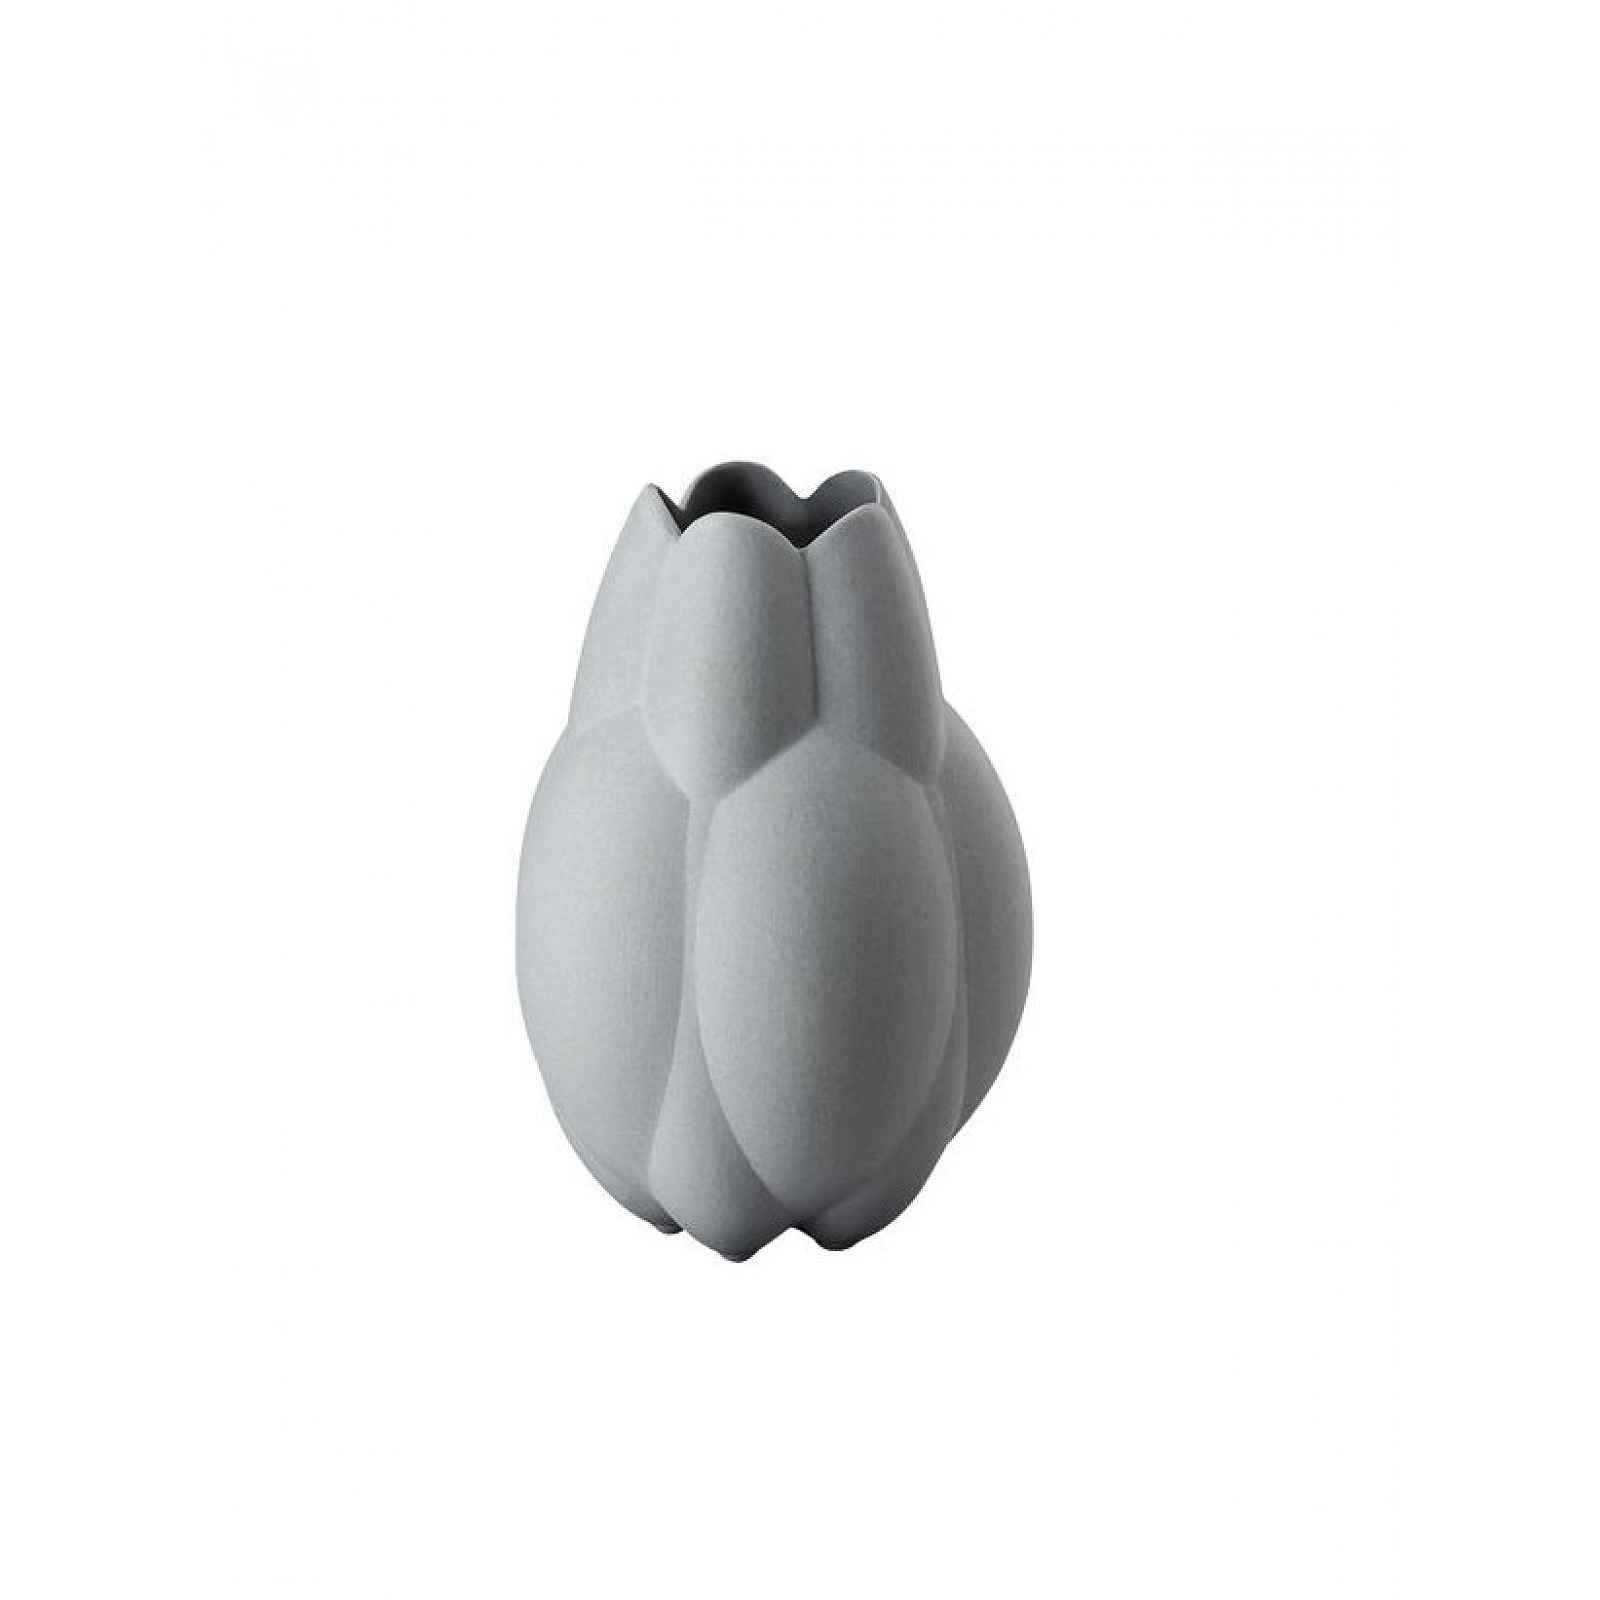 Rosenthal Mini váza Core, 10 cm, šedá Lava 14485-426320-26010